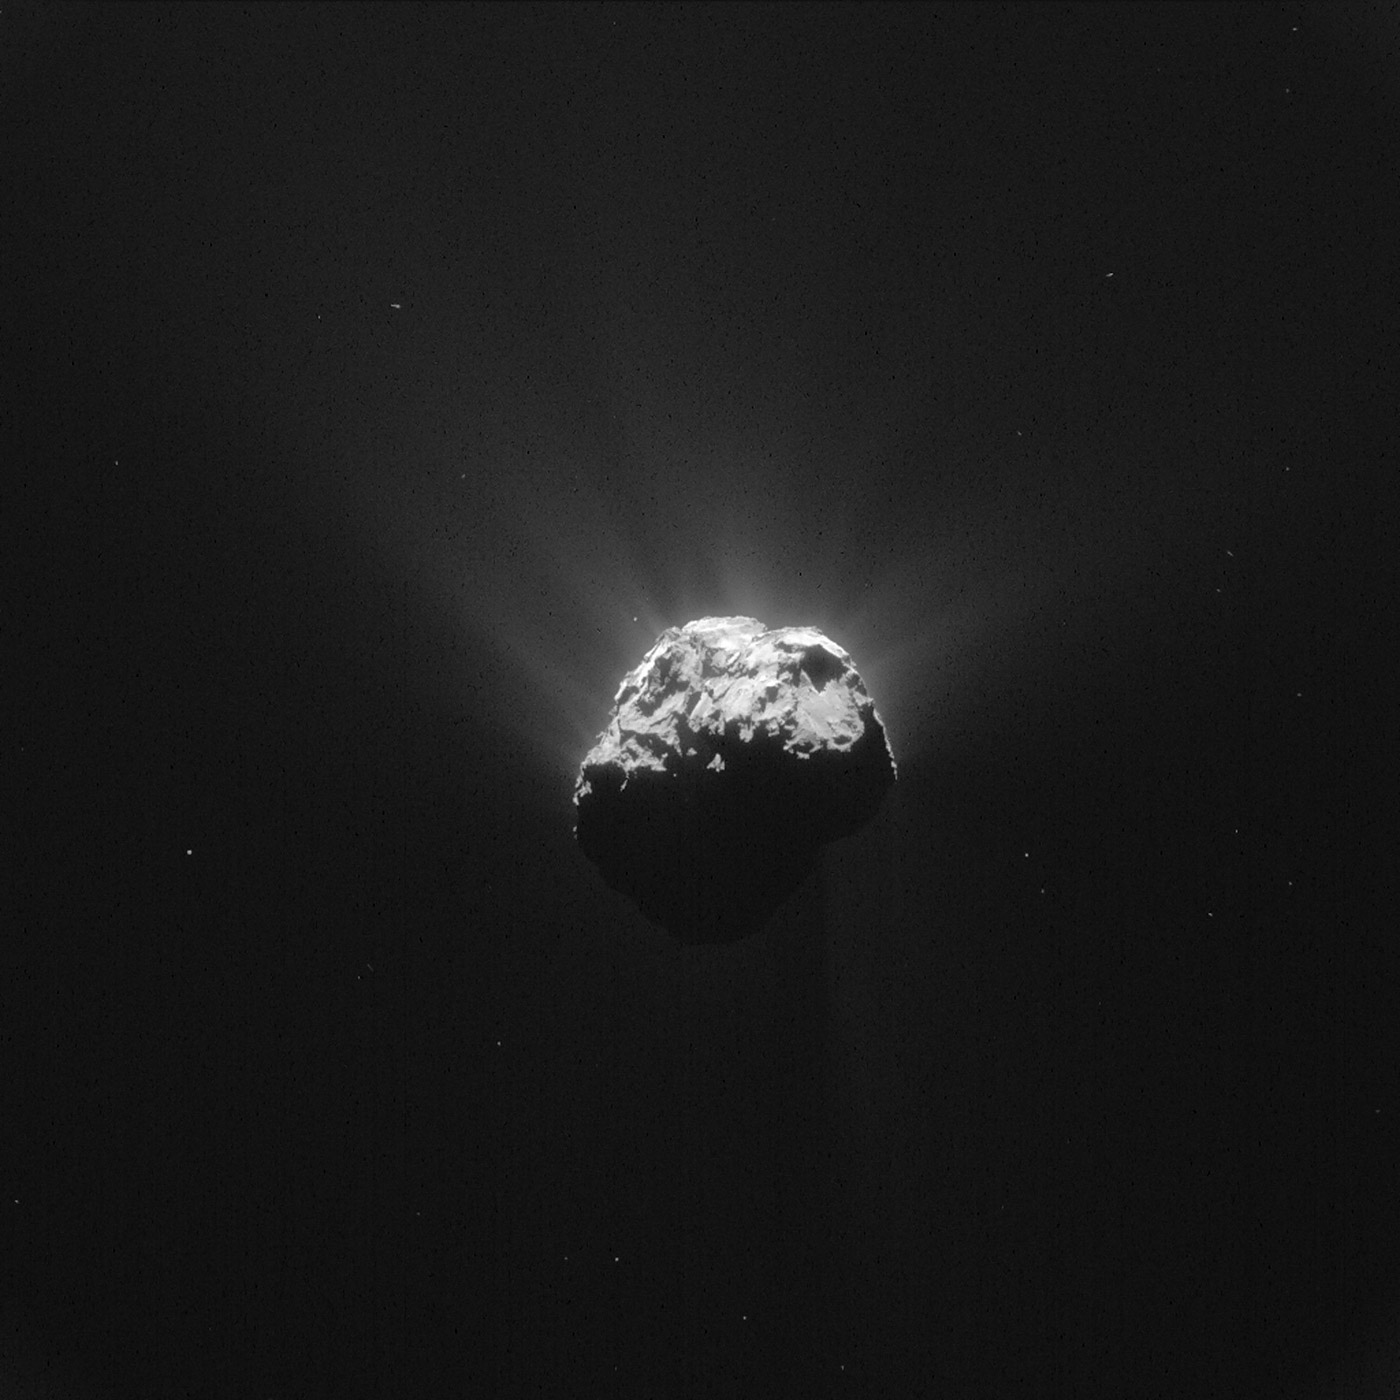 Comet 67P/Churyumov-Gerasimenko is seen in an image made by the Rosetta space probe